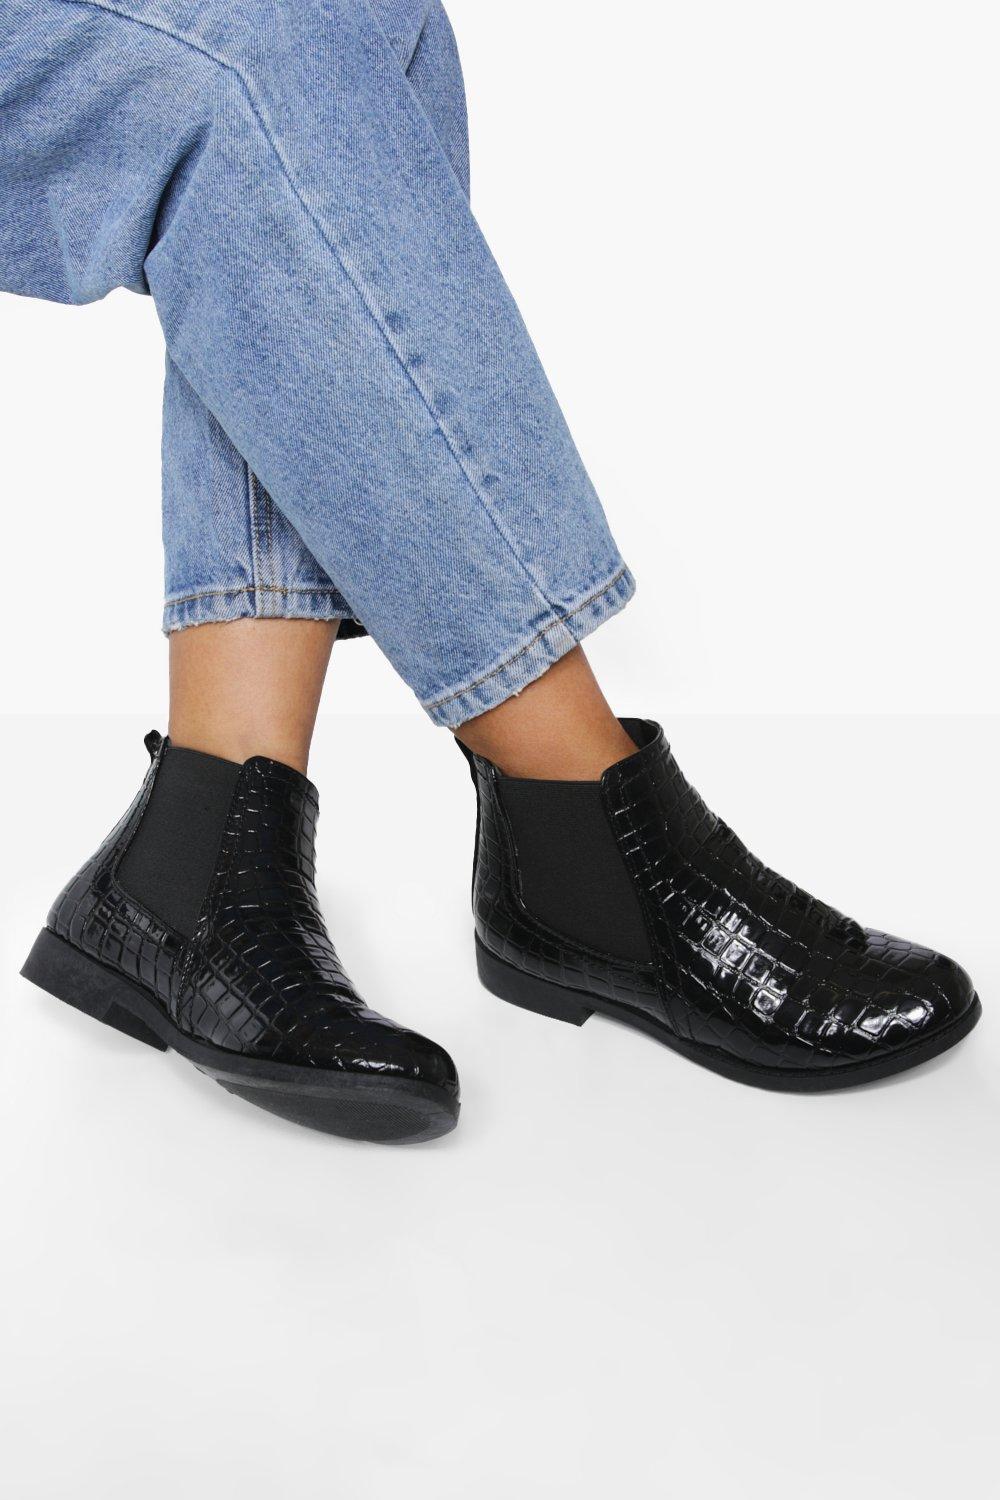 croc black boots